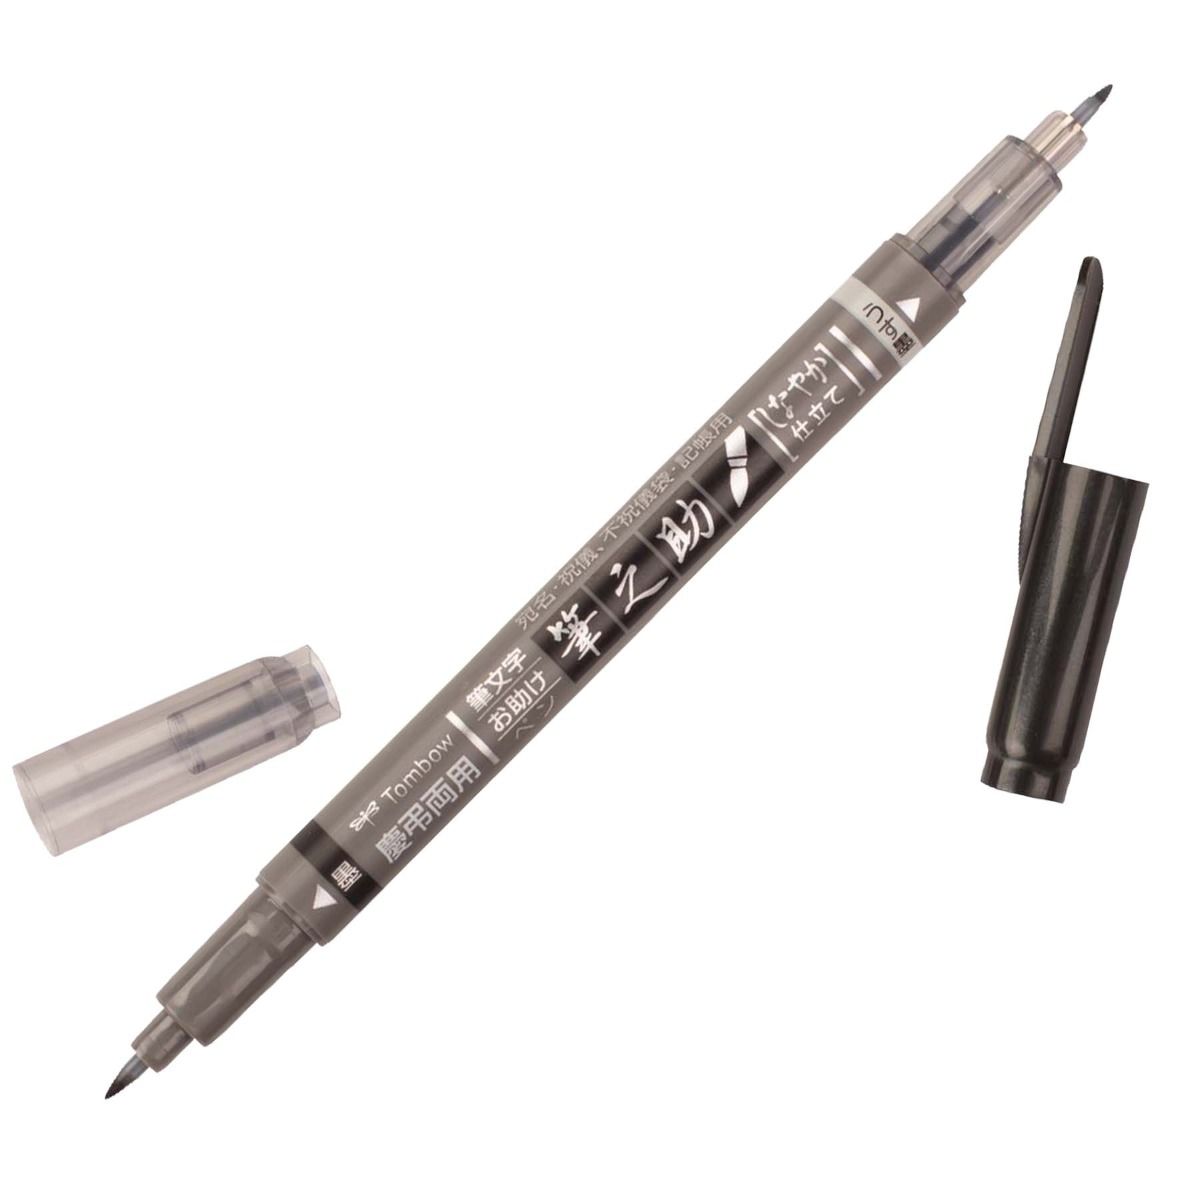 Tombow Fudenosuke Brush Pen, Twin Tip, Black-Gray